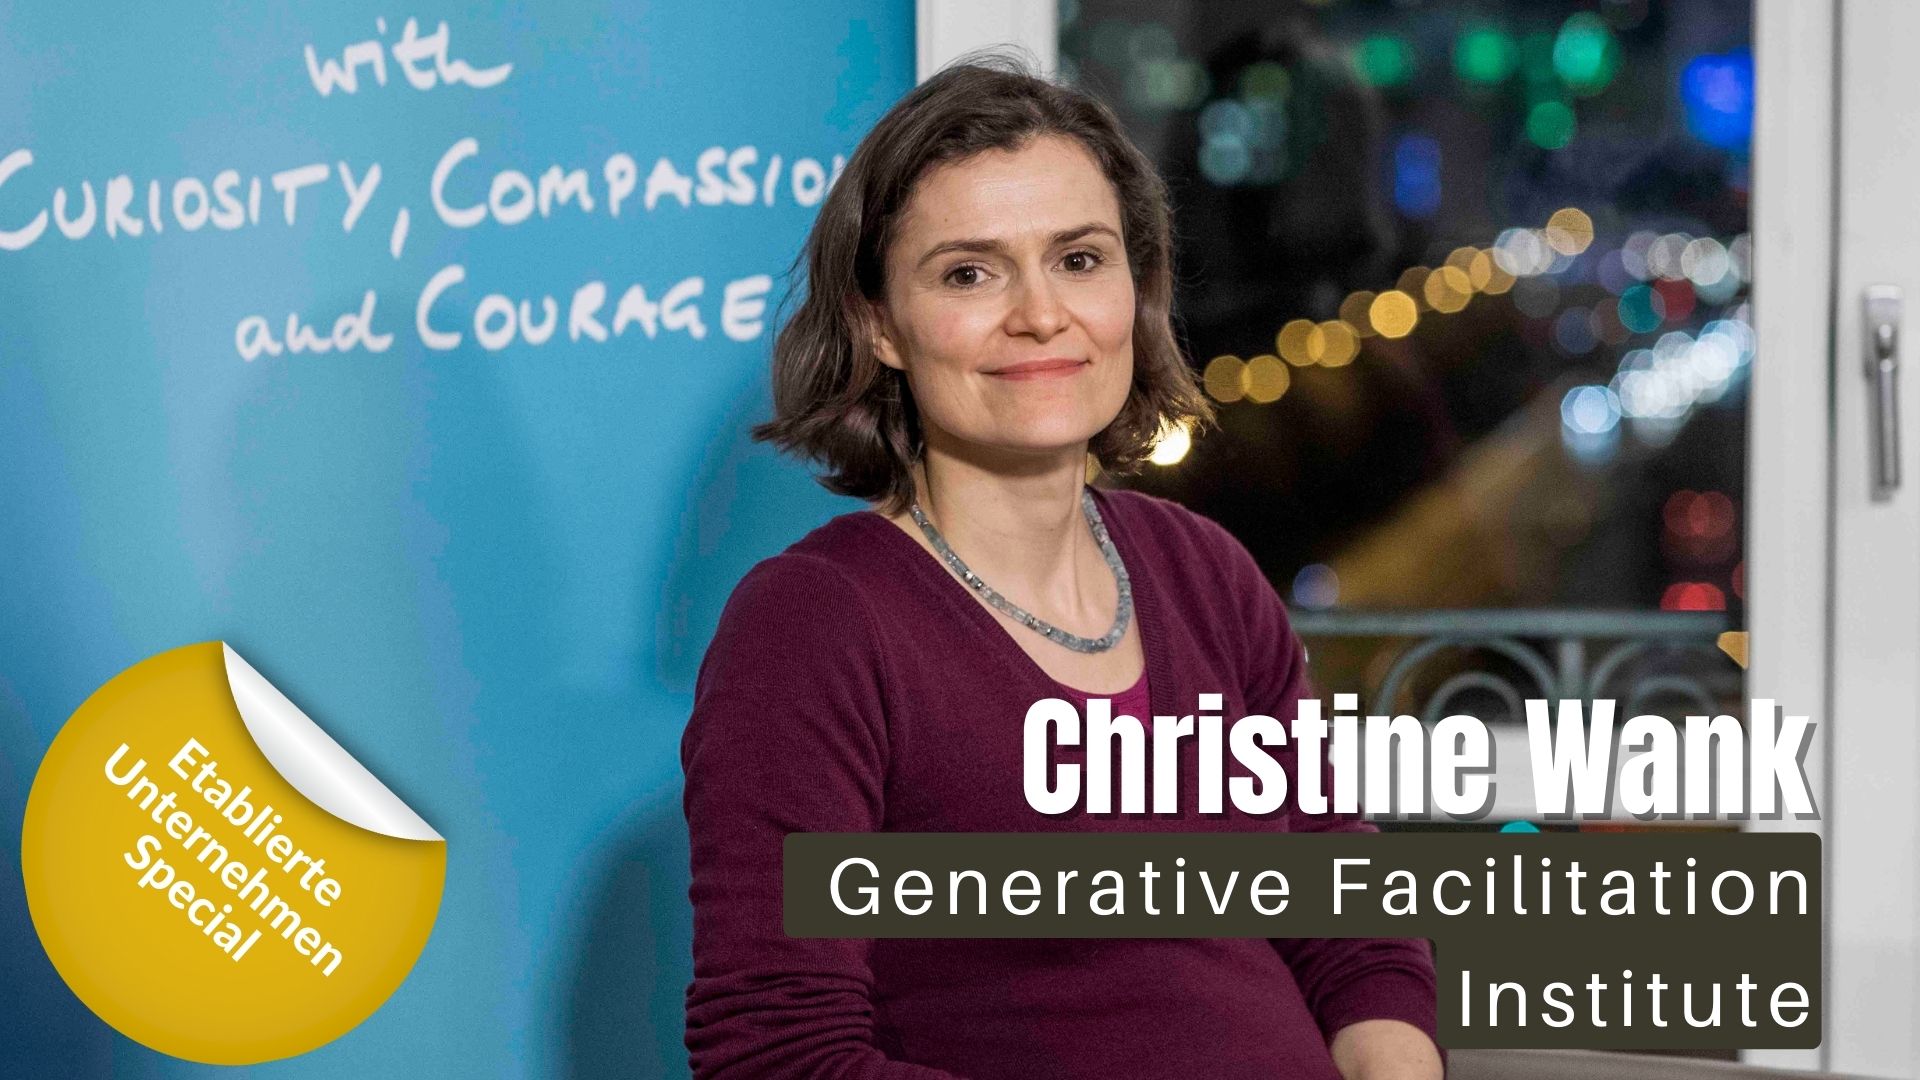 Christine Wank vom Generative Facilitation Institute